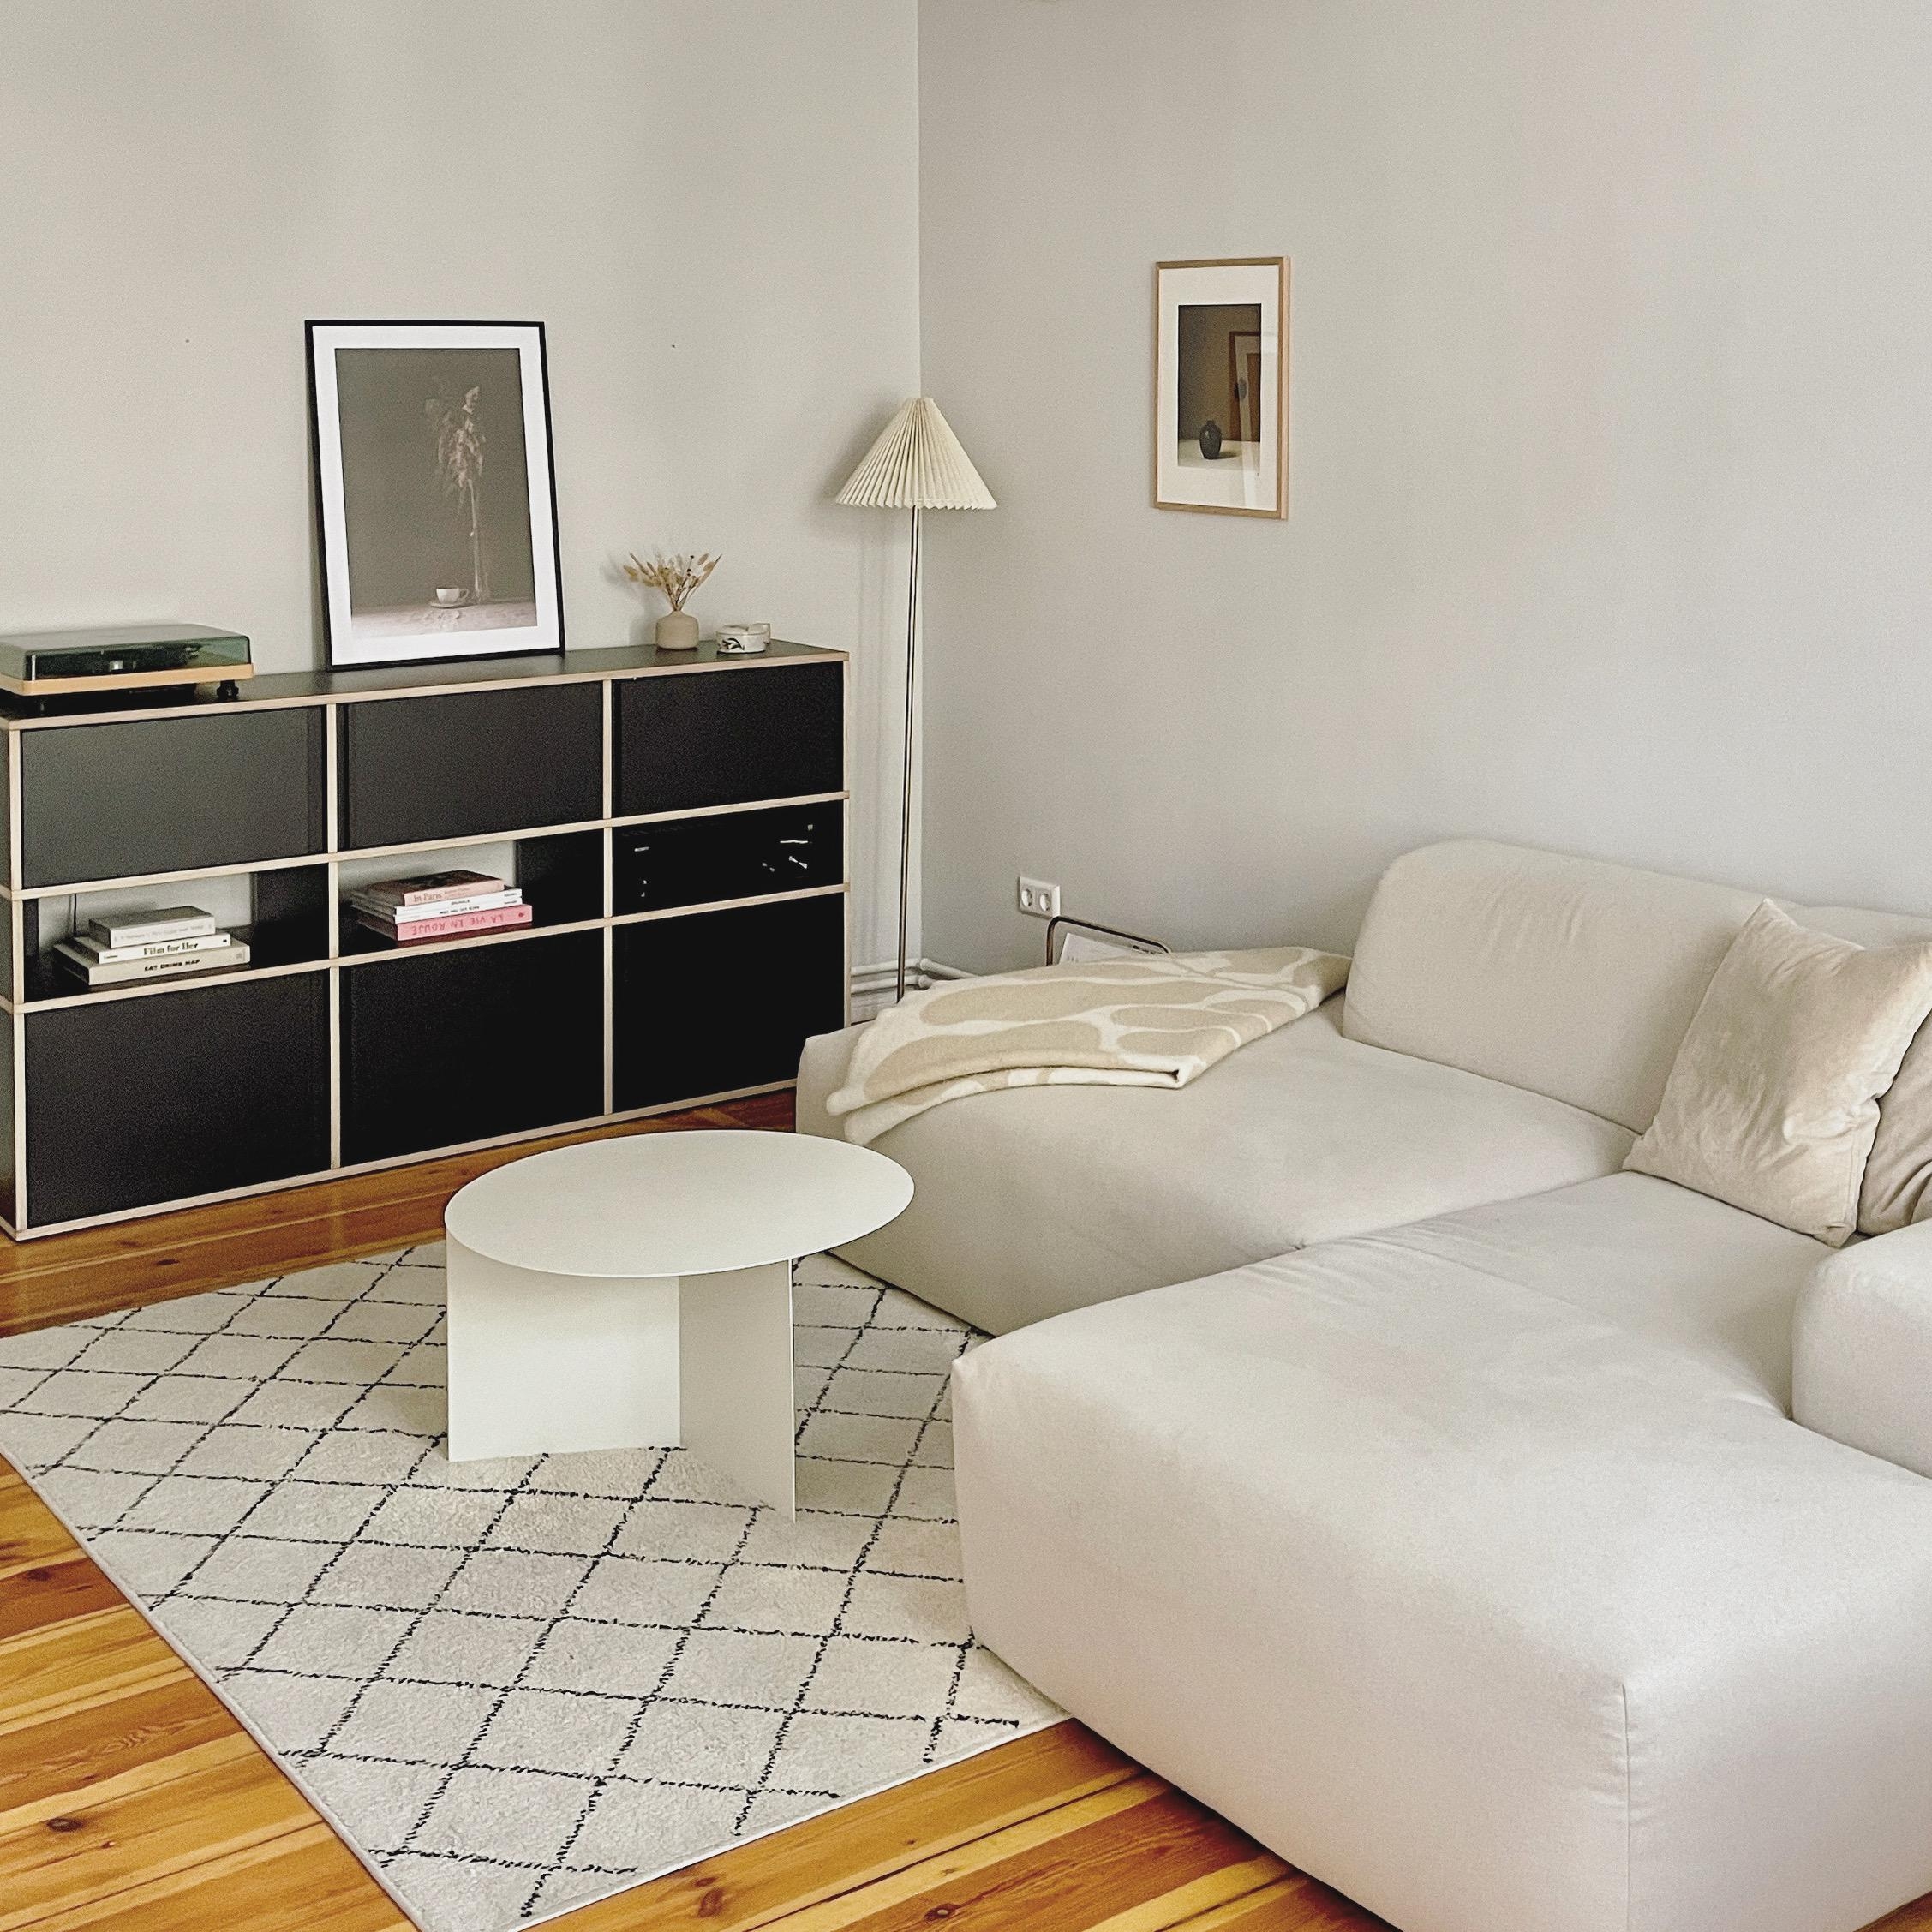 #simplicity #livingroom #altbauliebe #tylko